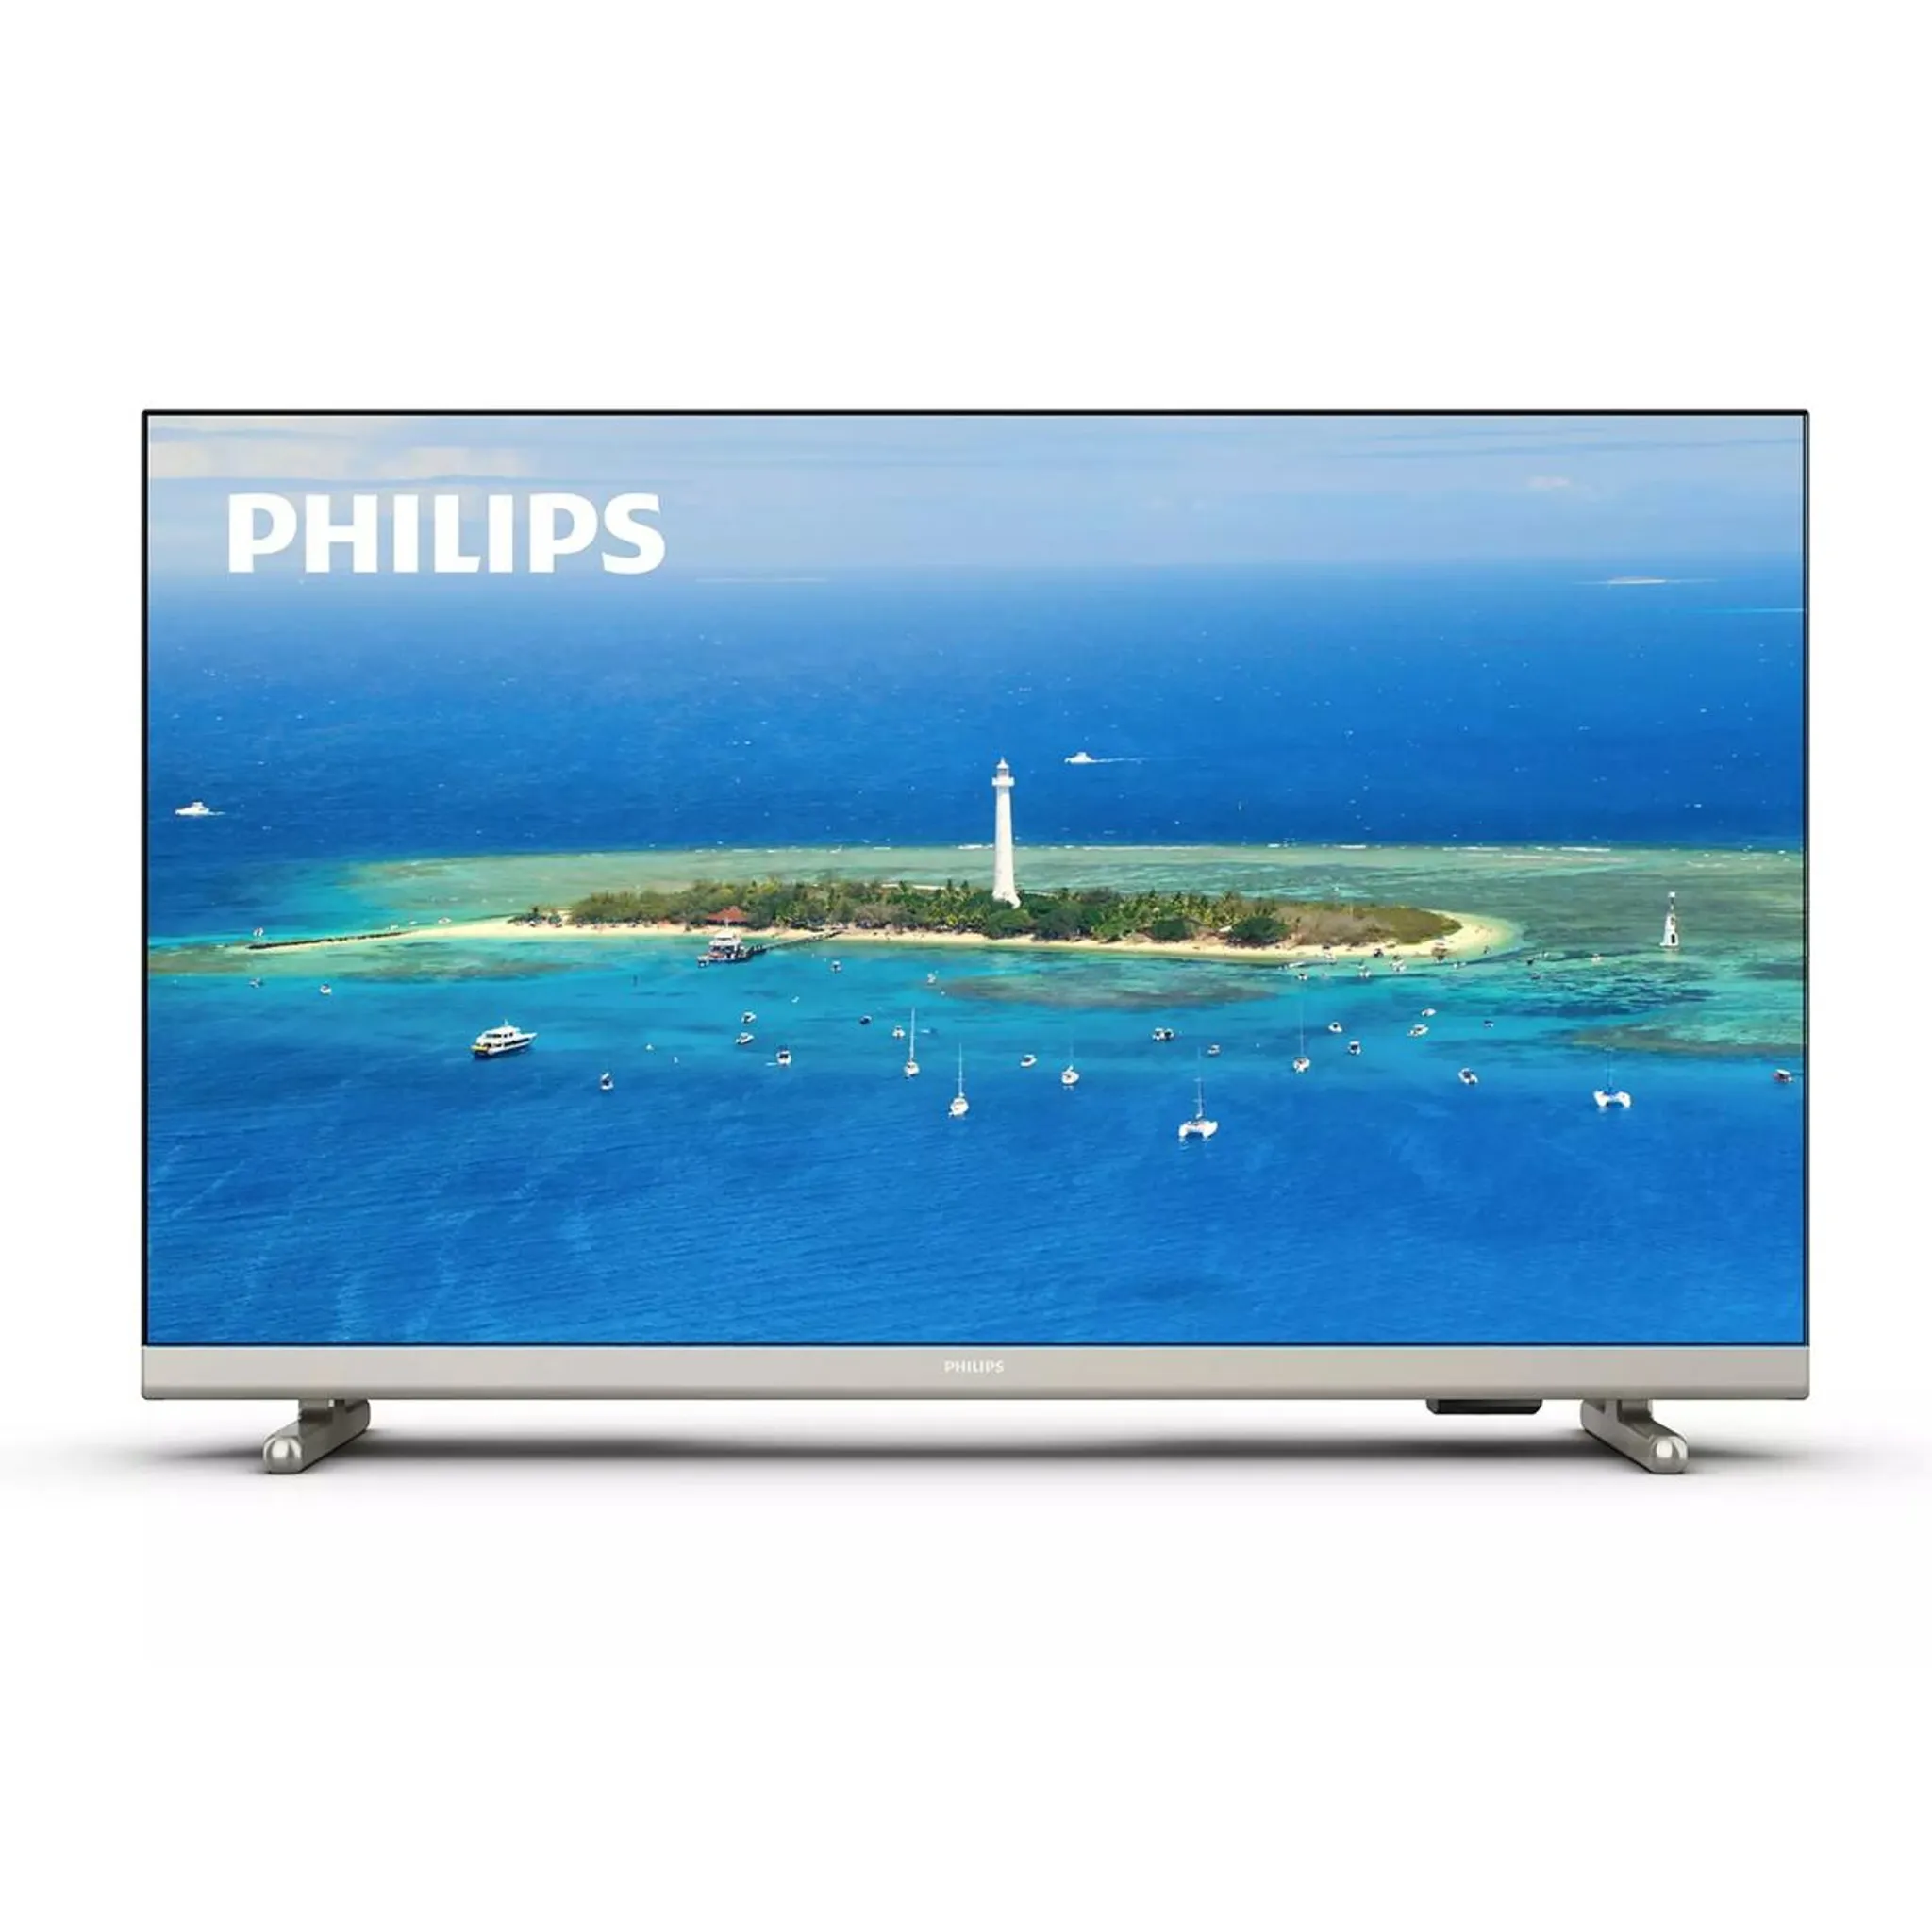 HD LED Fernseher 32PHS5527/12 32 TV PHILIPS